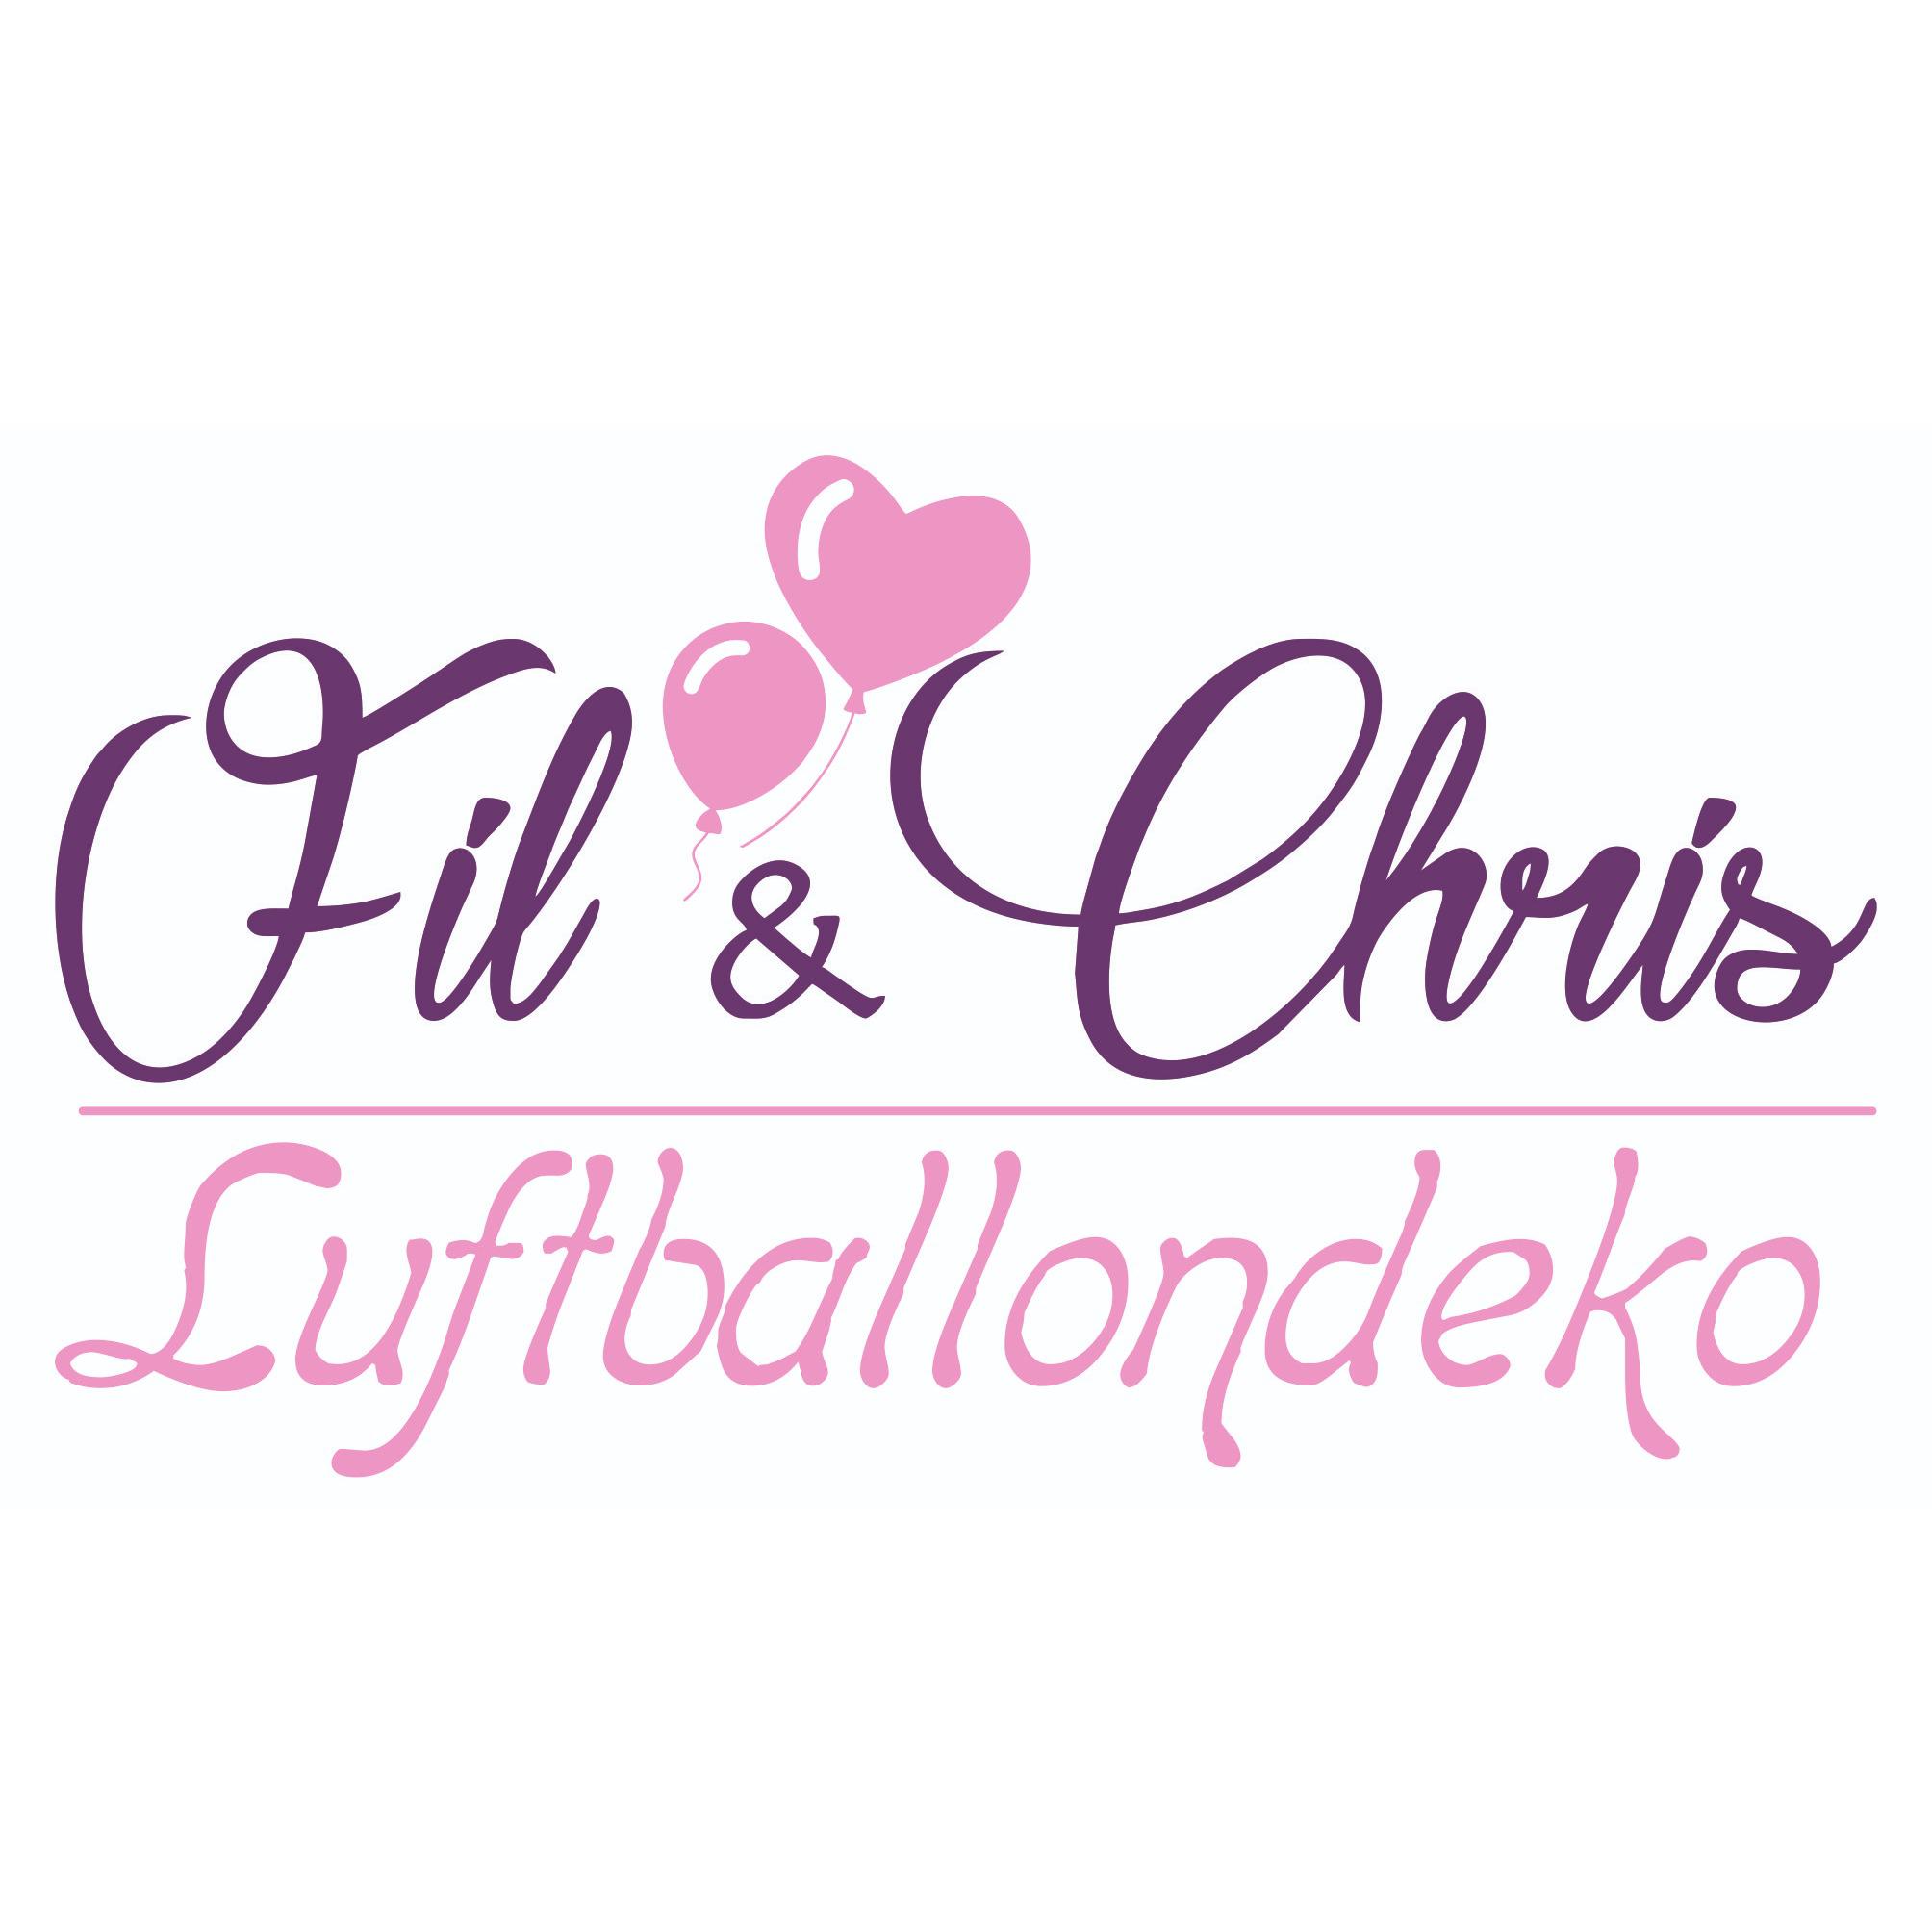 Fil & Chris Luftballondeko Logo